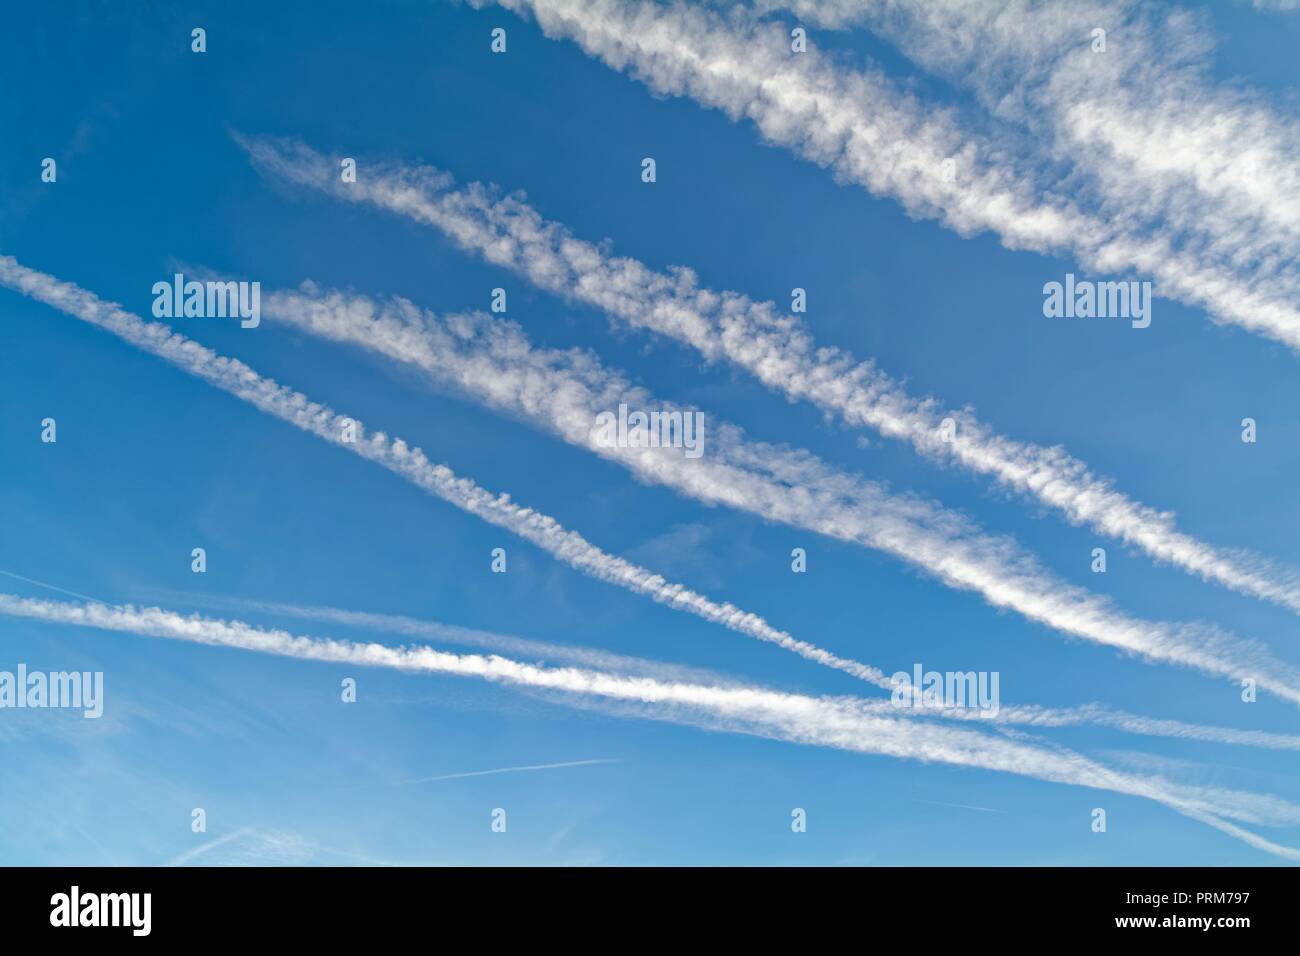 Avions de recul trainées contre un ciel bleu Surrey England UK Banque D'Images